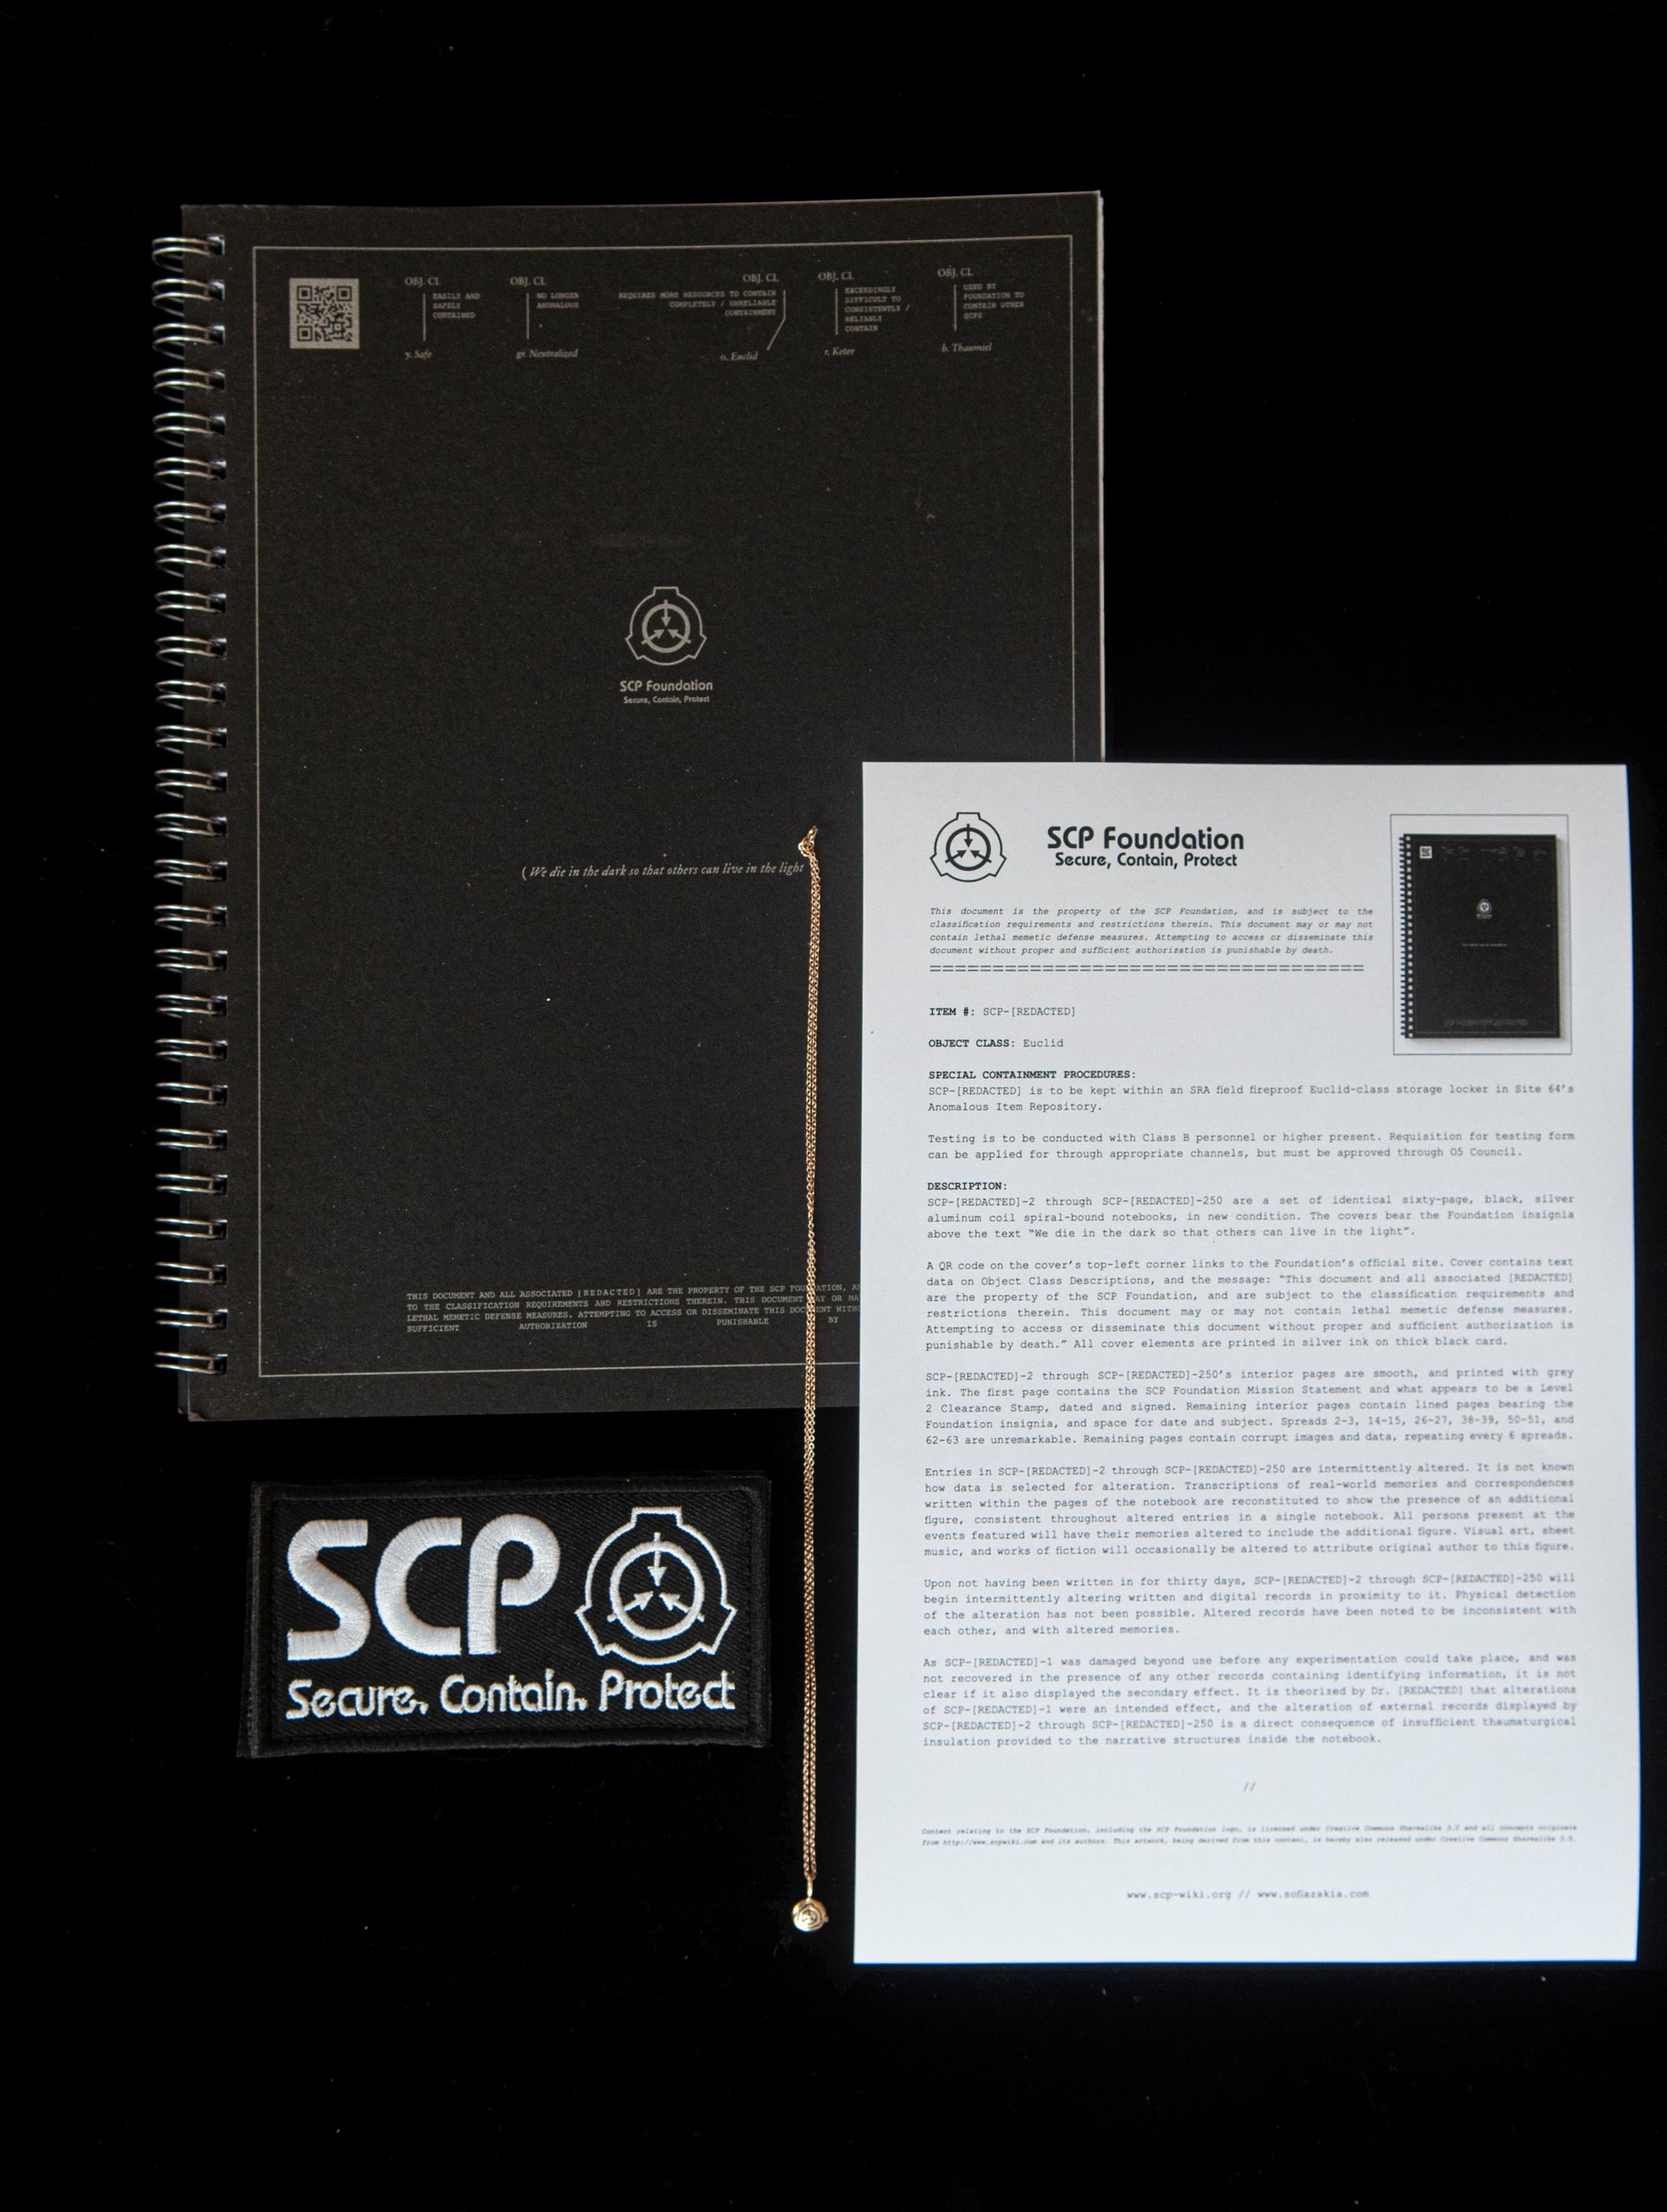 SCP Foundation - Foundation Handbook - Volume I